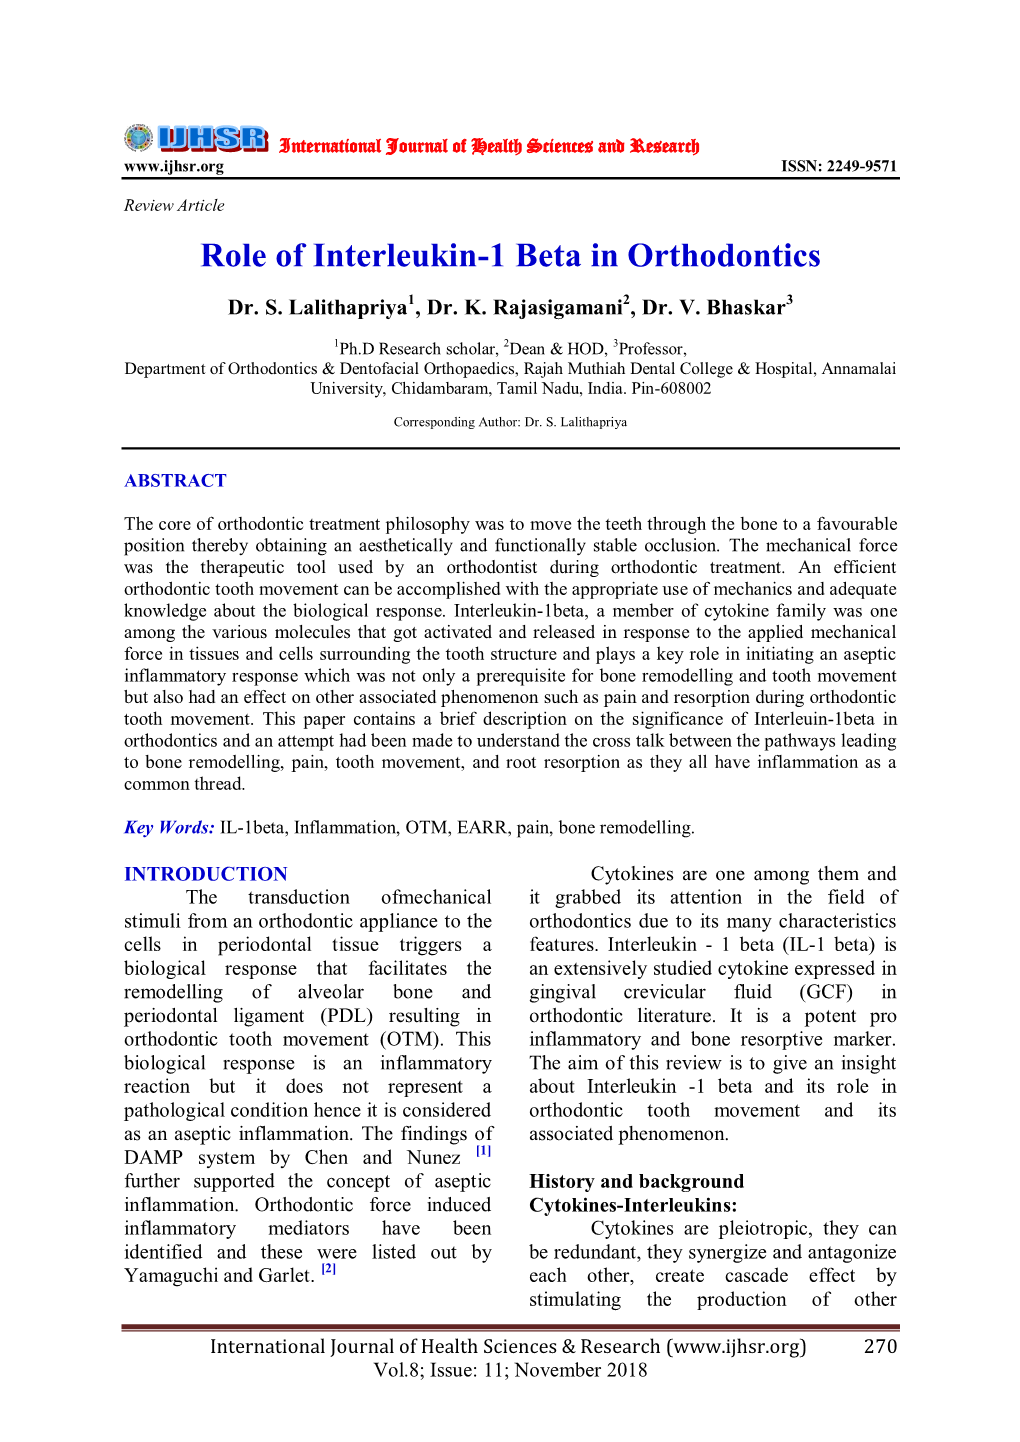 Role of Interleukin-1 Beta in Orthodontics